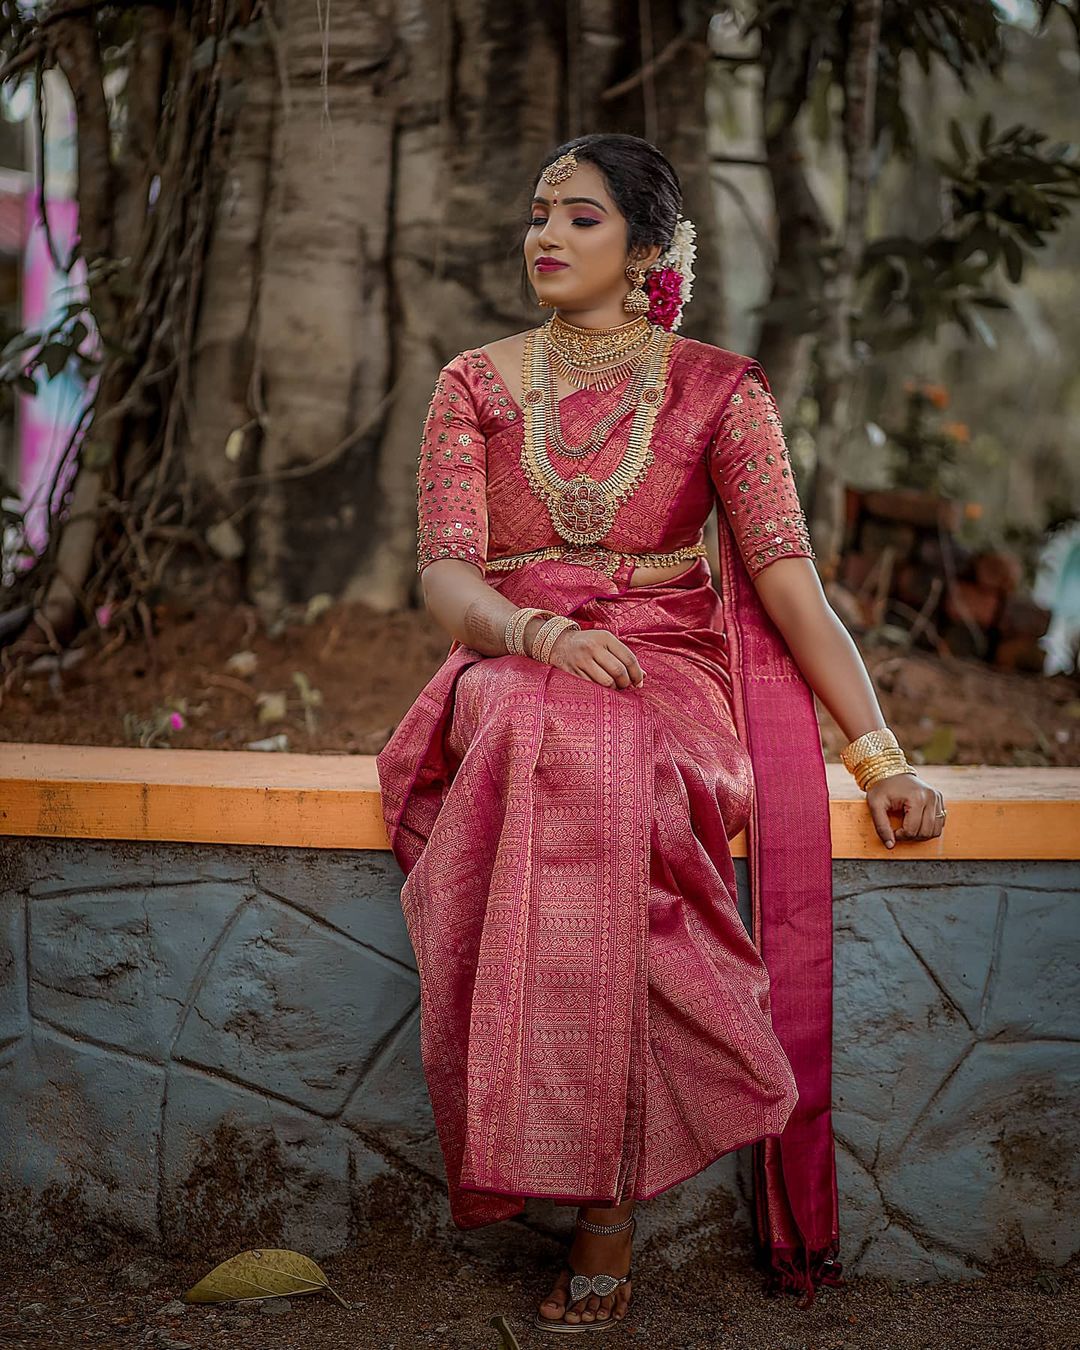 Indian Wedding Sarees for Bride - Buy Wedding Sarees Online USA